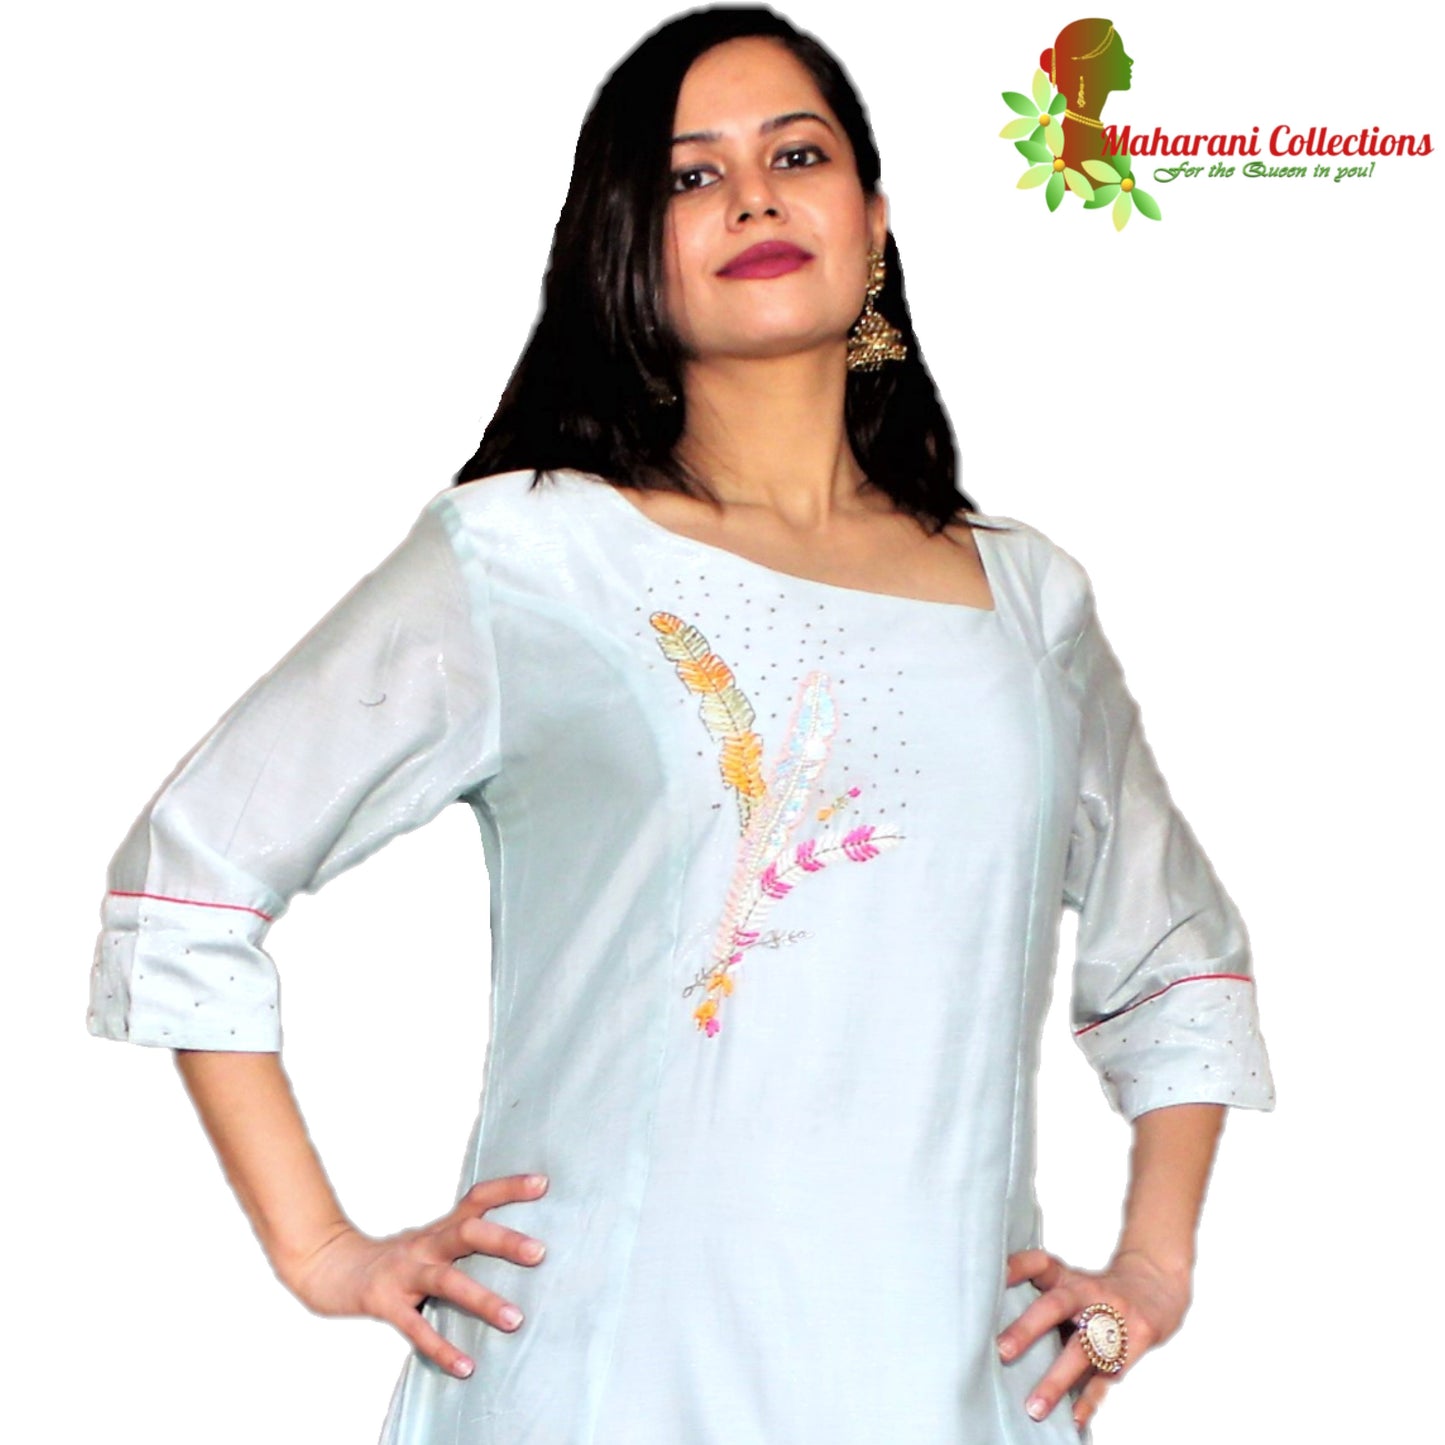 Maharani's Silk Long Evening Gown with Dupatta - Sea Green (M)